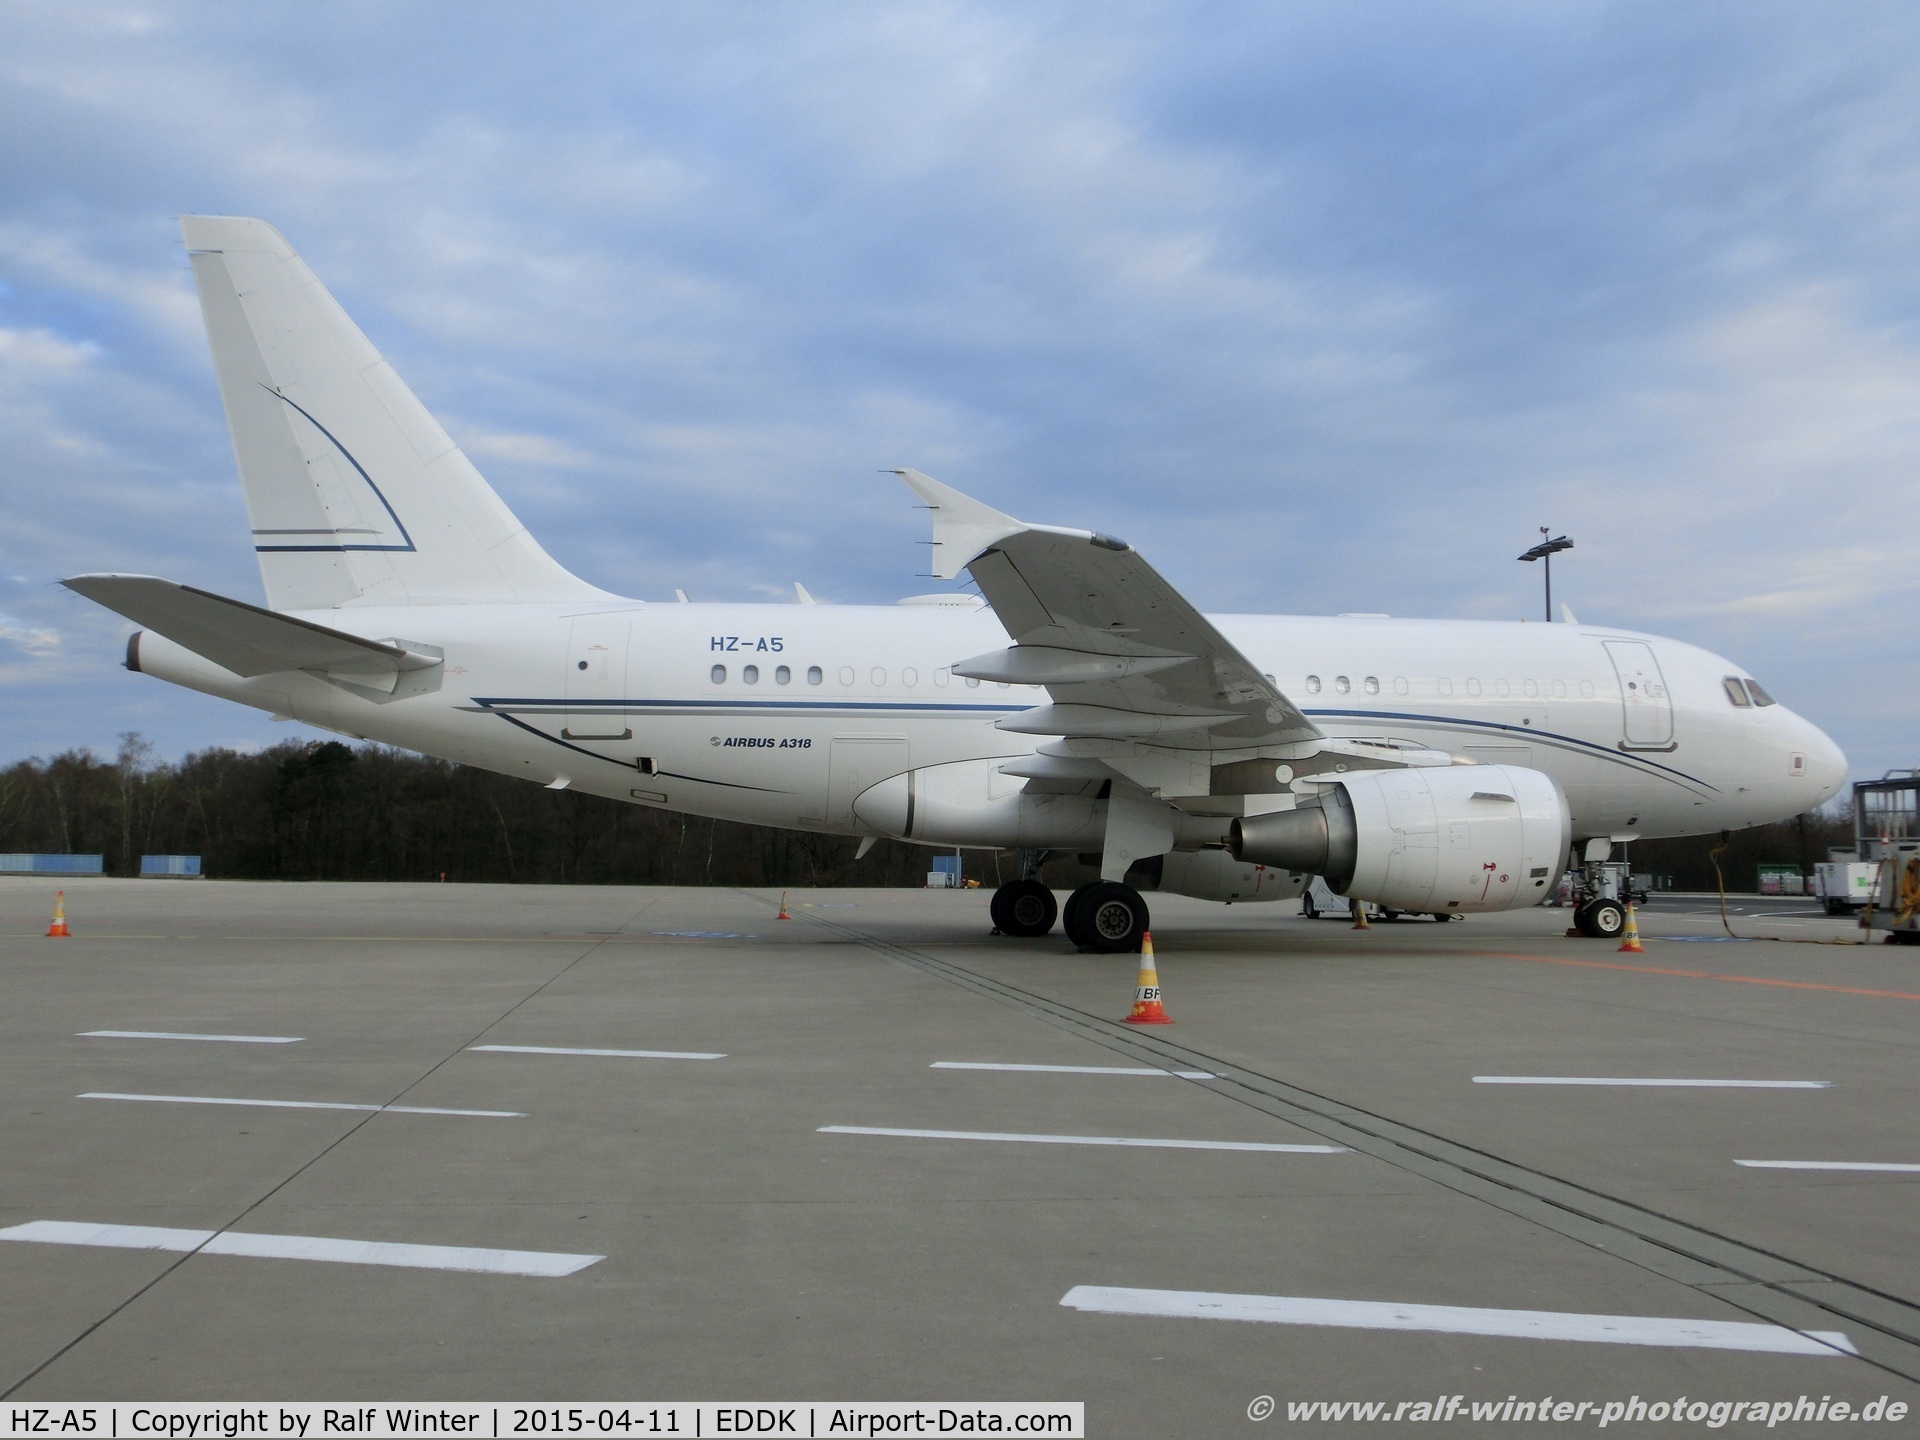 HZ-A5, 2006 Airbus ACJ318 (A318-112/CJ) C/N 2910, Airbus A318-112(CJ) Elite - STT Alpha Star - 2910 - HZ-A5 - 11.04.2015 - CGN